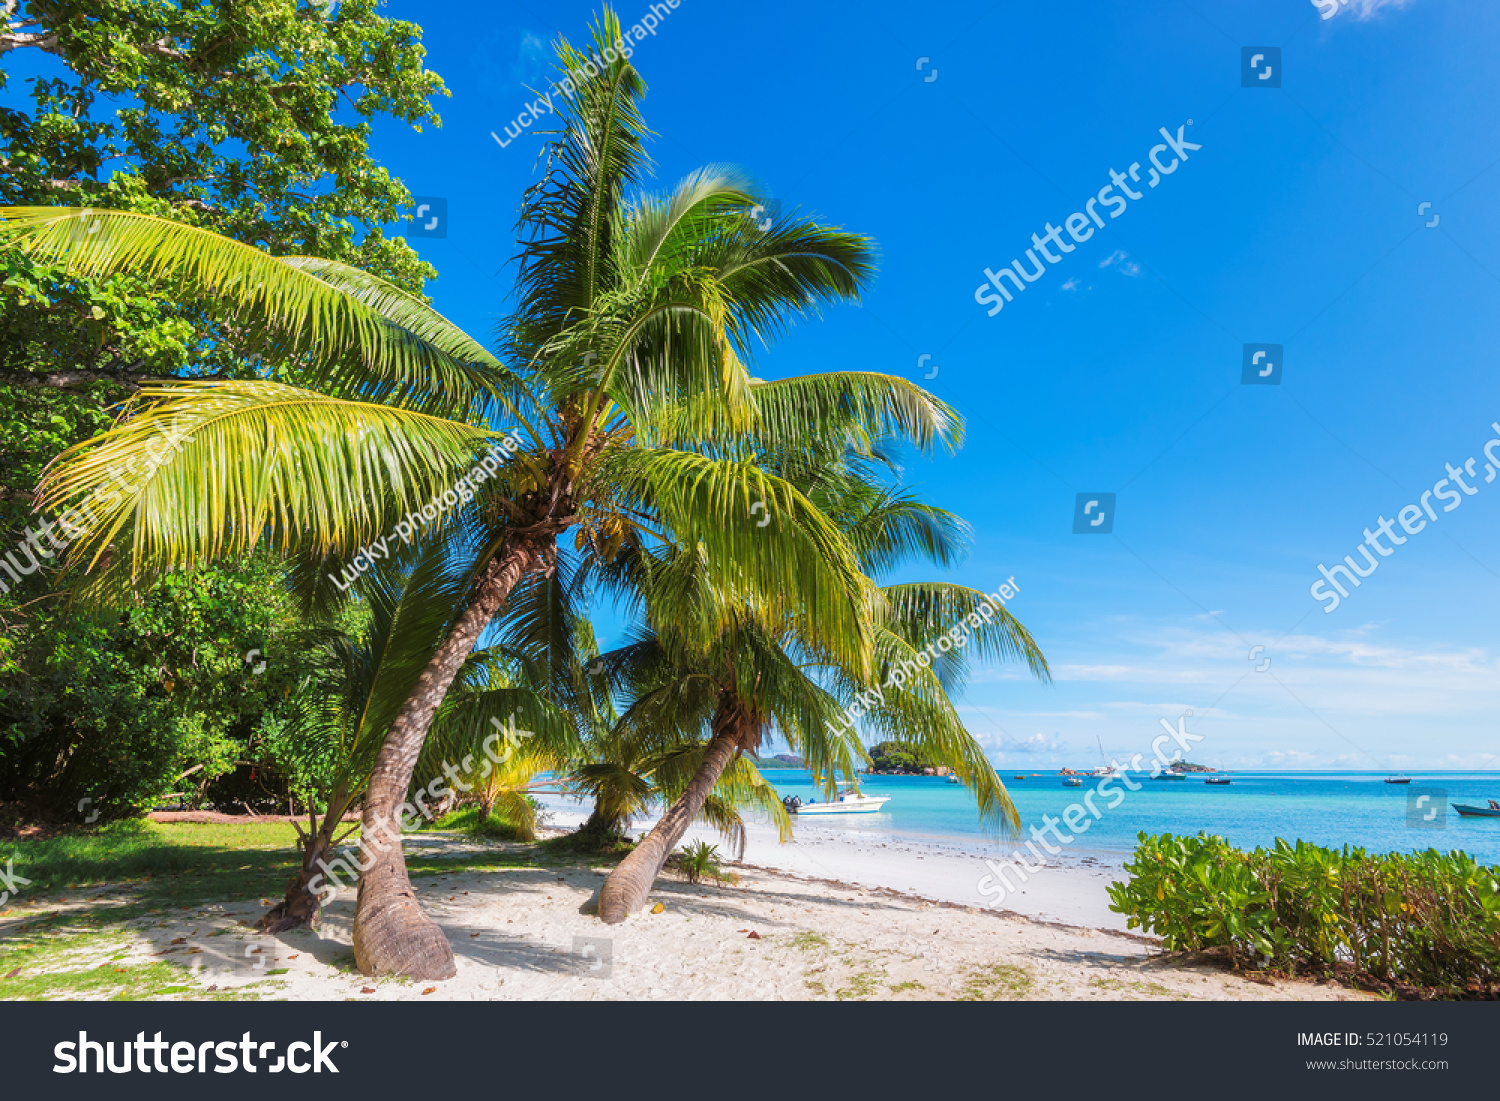 Tropical Island Stock Photo 521054119 : Shutterstock